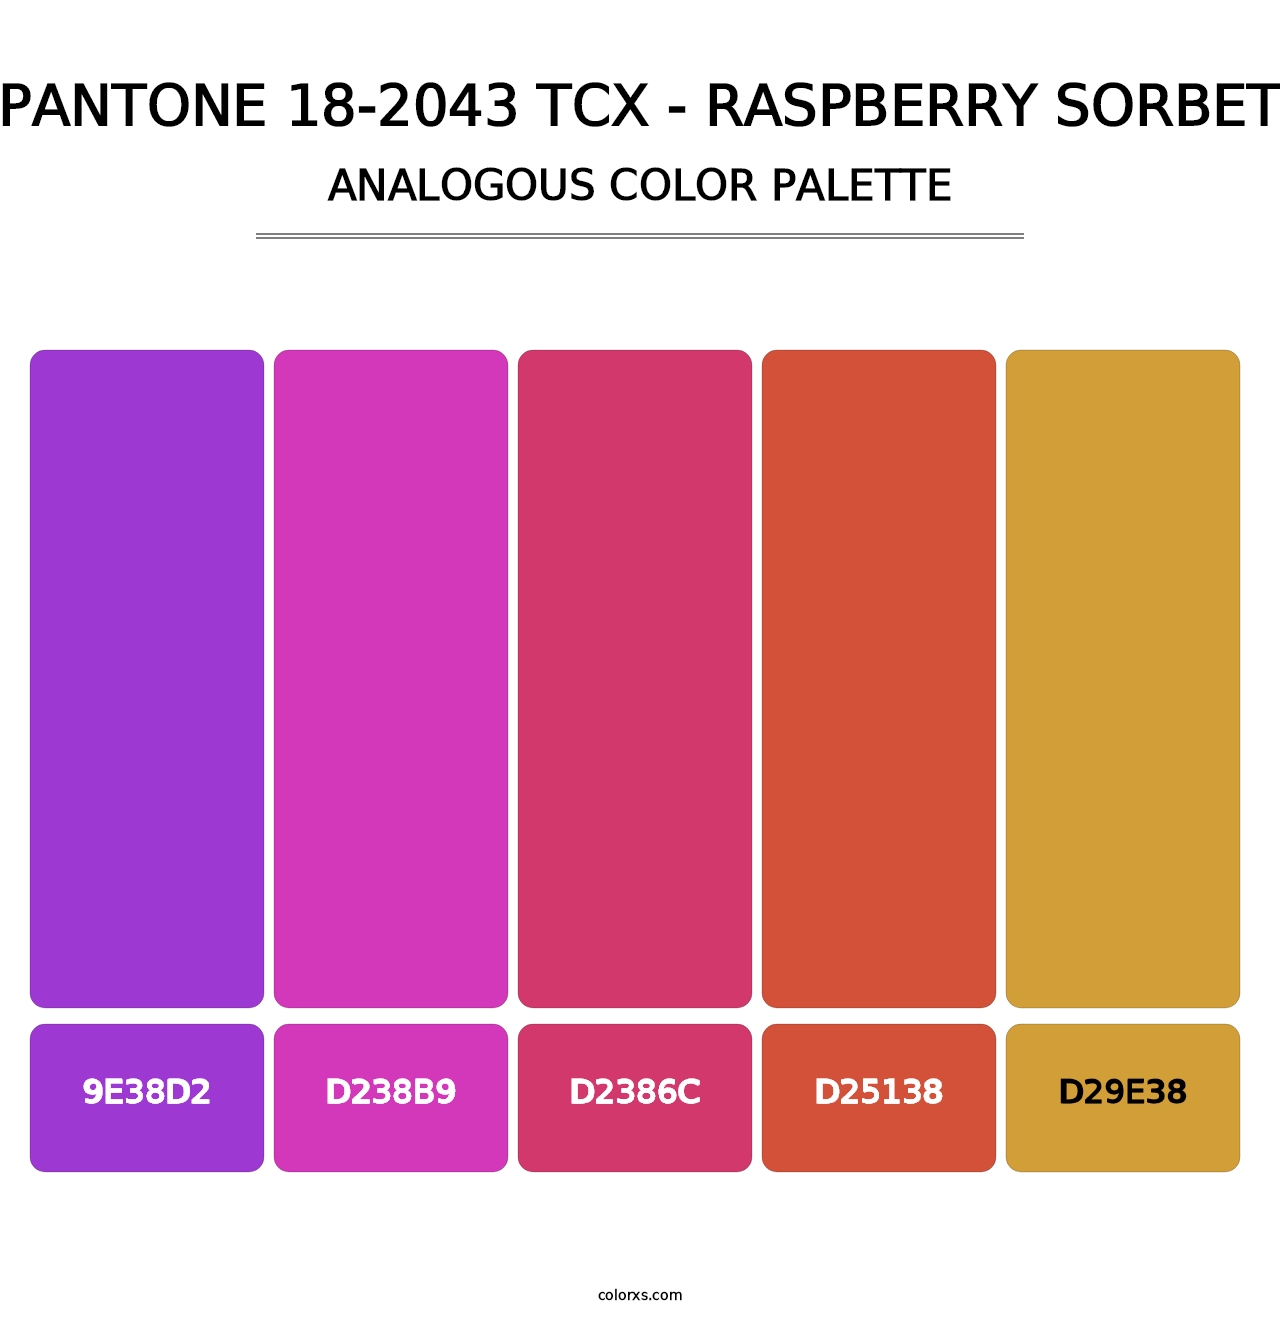 PANTONE 18-2043 TCX - Raspberry Sorbet - Analogous Color Palette